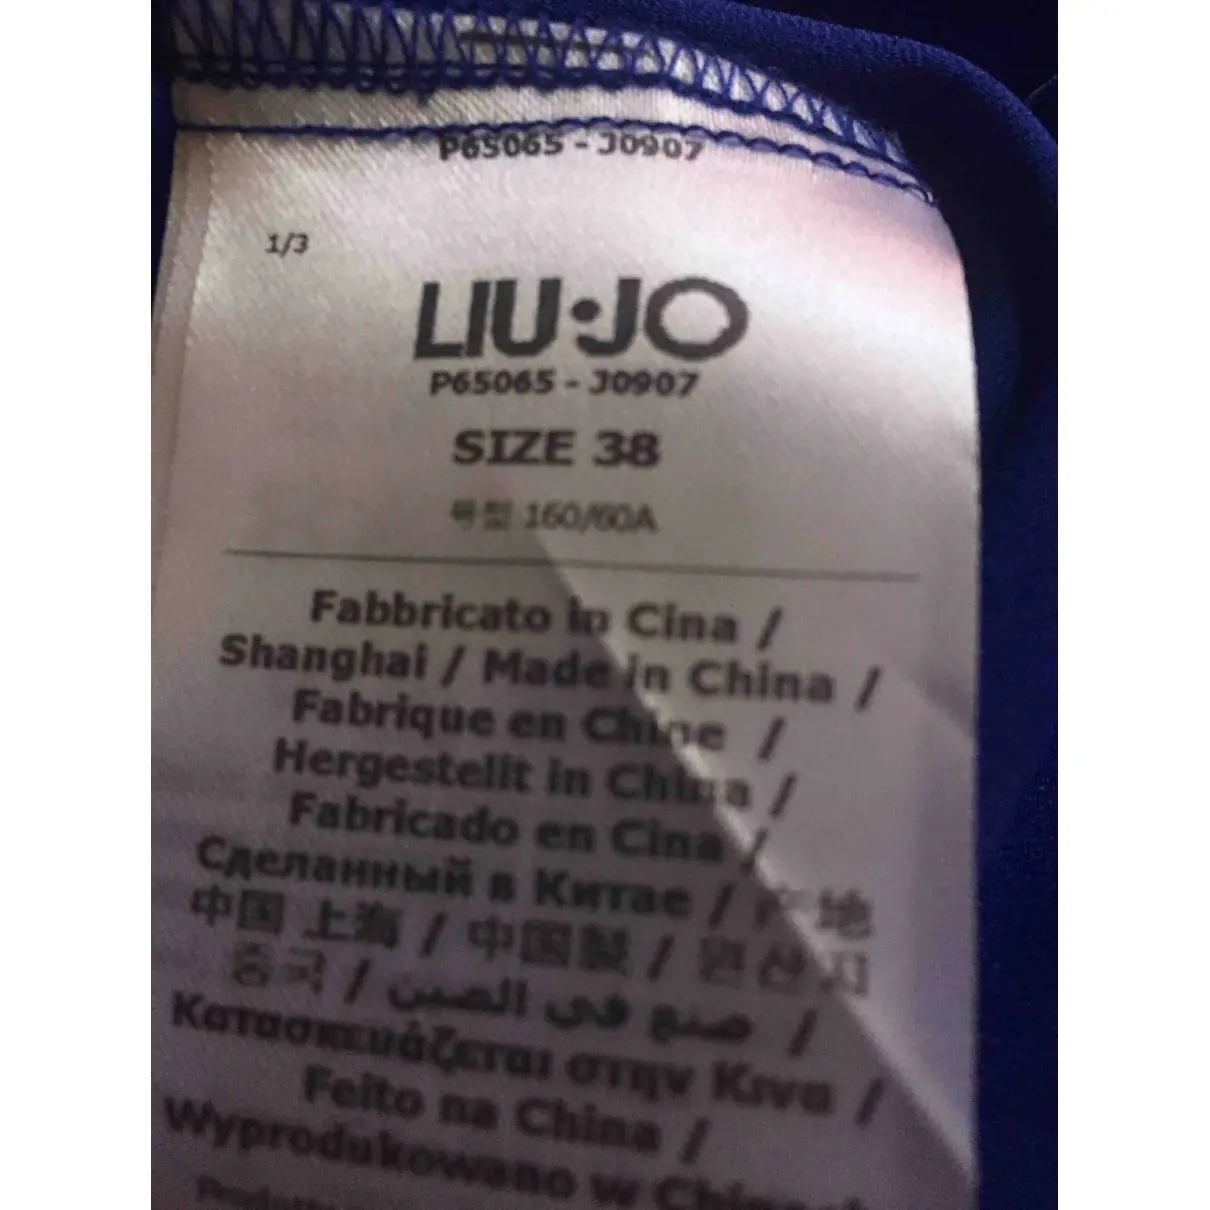 Buy Liu.Jo Mini skirt online